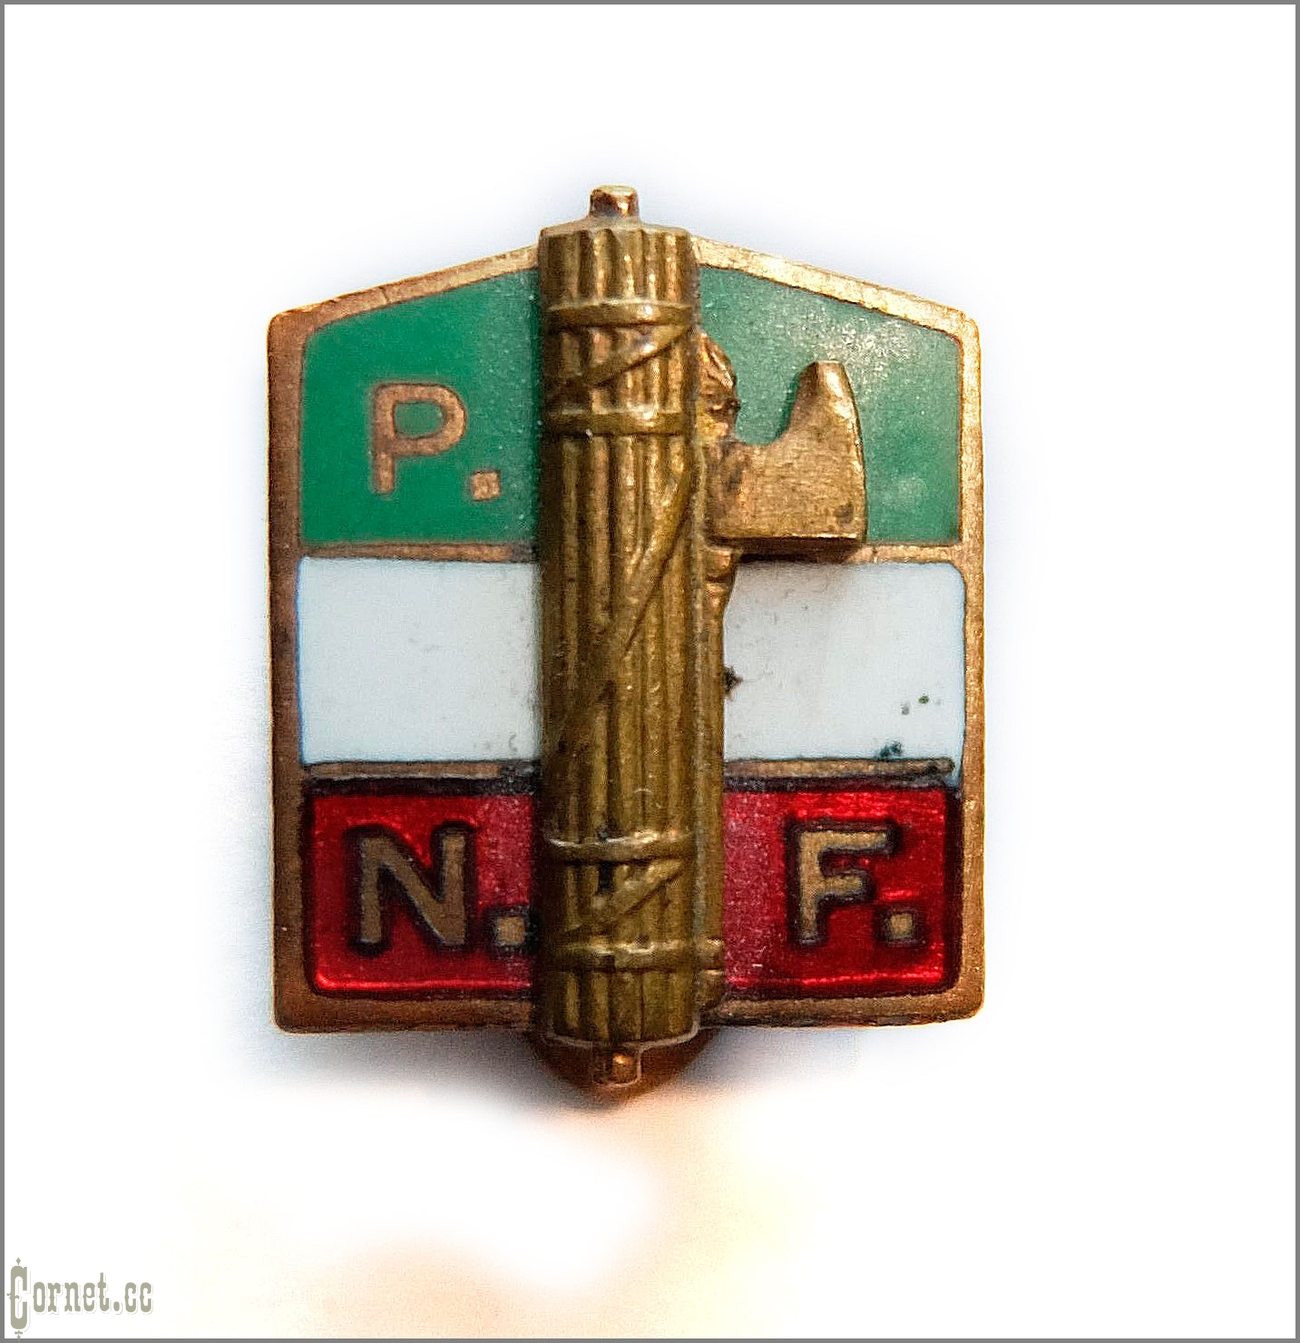 Member badge of the Italian, Fascist party.